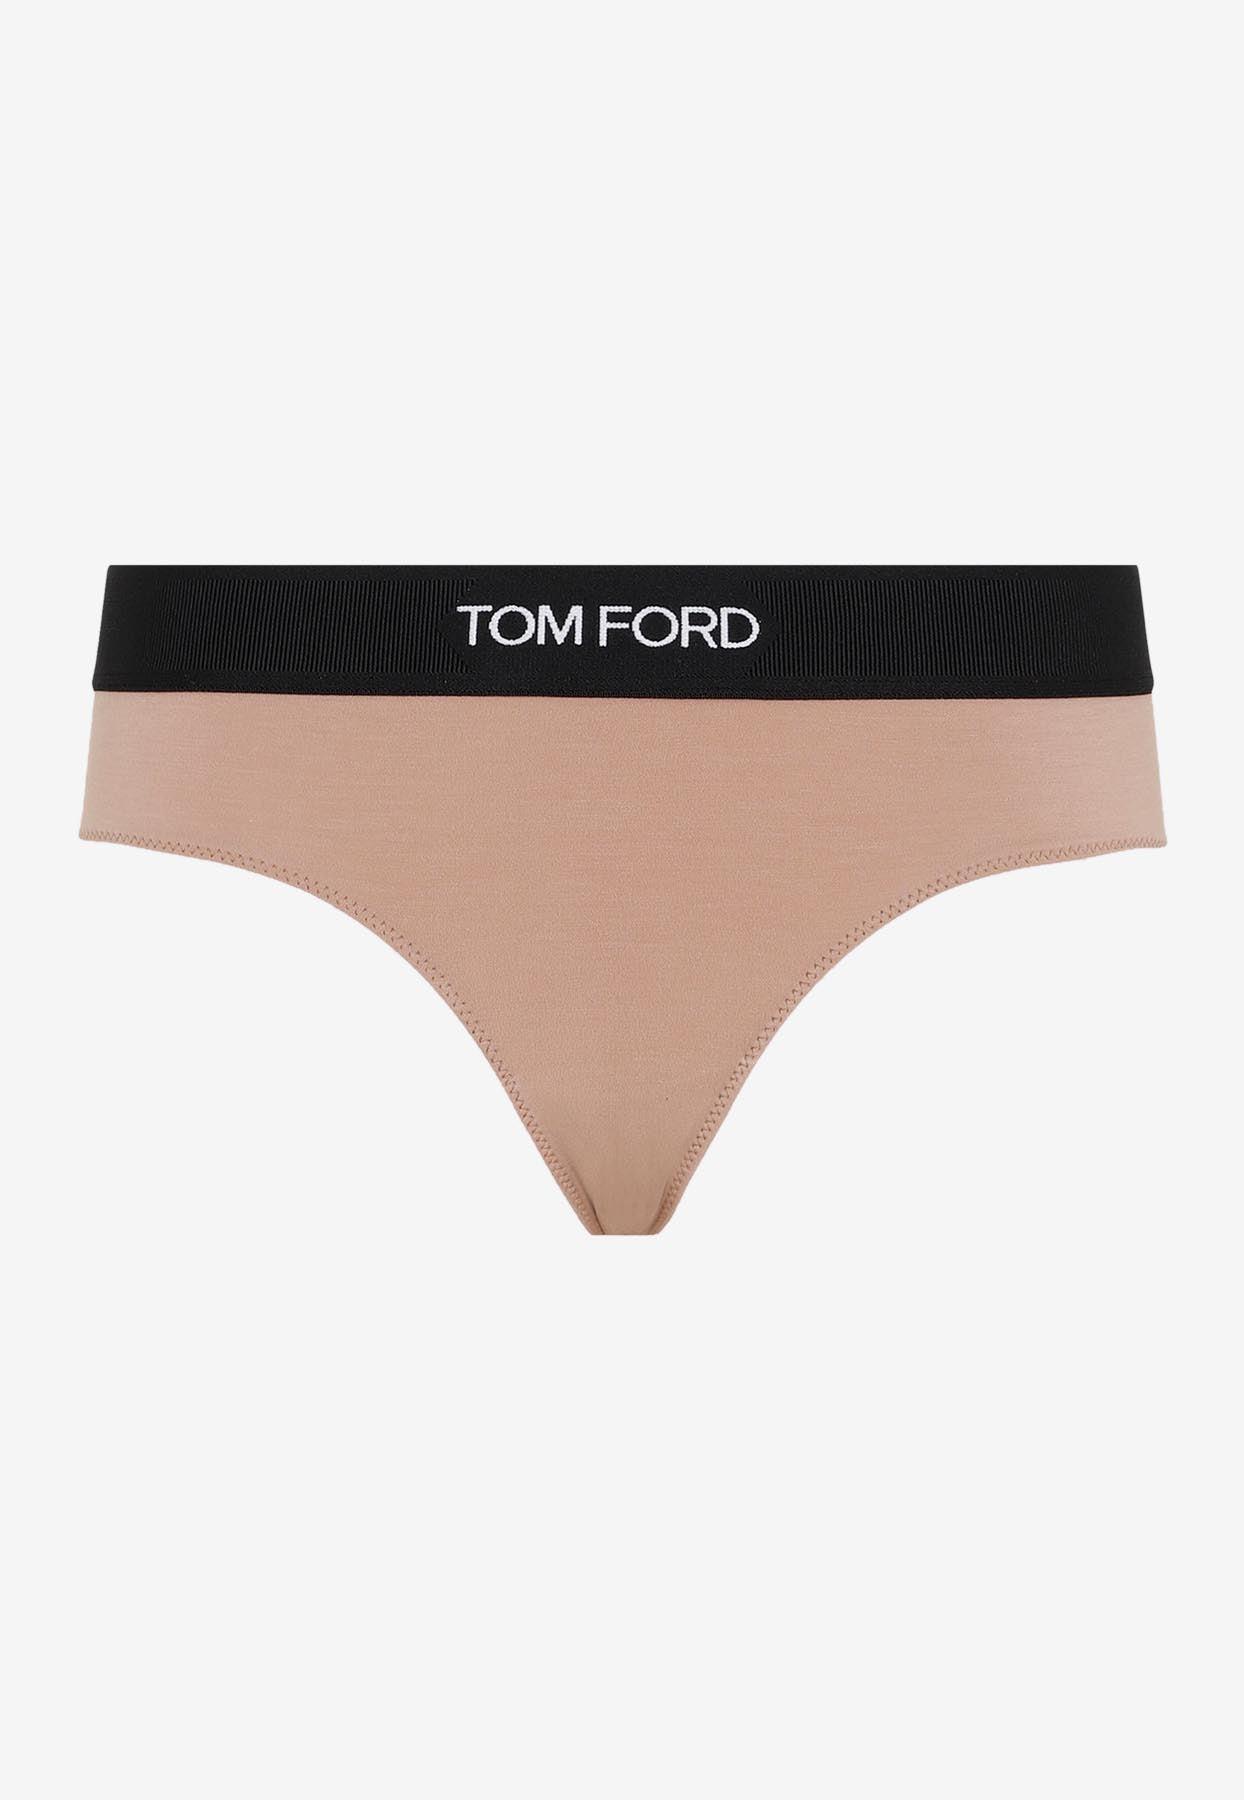 Tom Ford Logo Waistband Underwear Slip in Black | Lyst